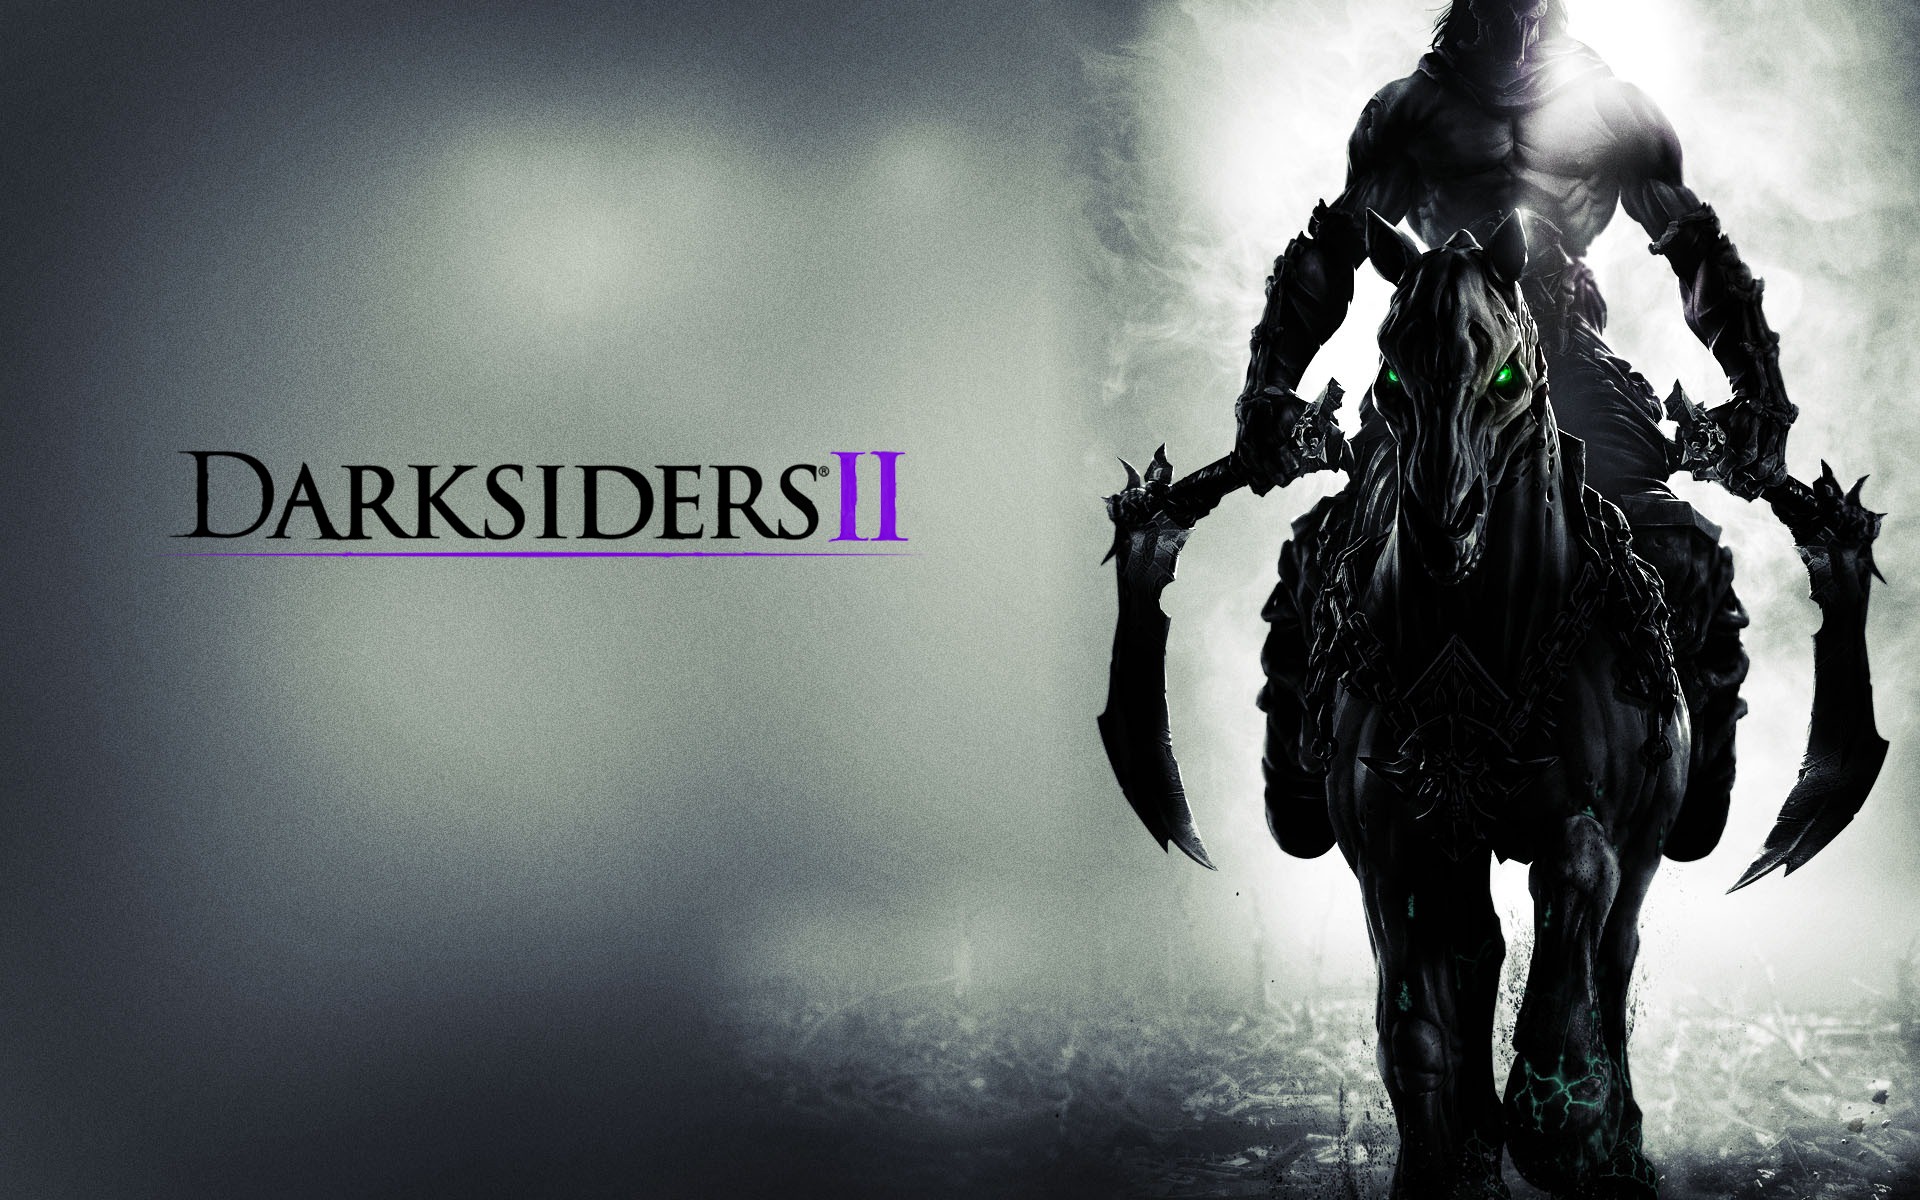 Darksiders II 暗黑血统 2 游戏高清壁纸4 - 1920x1200